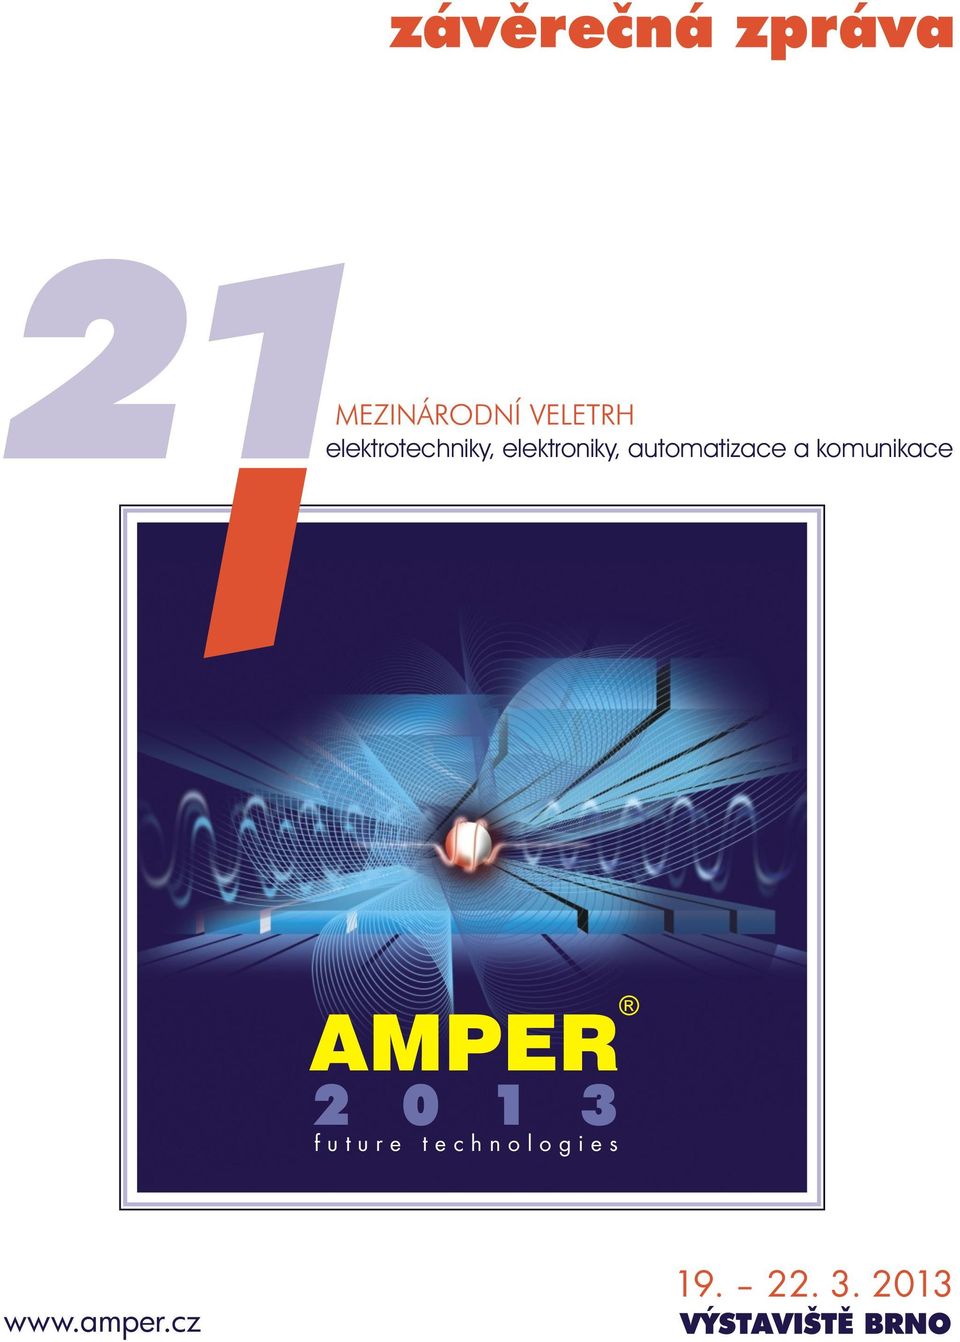 3 future technologies www.amper.